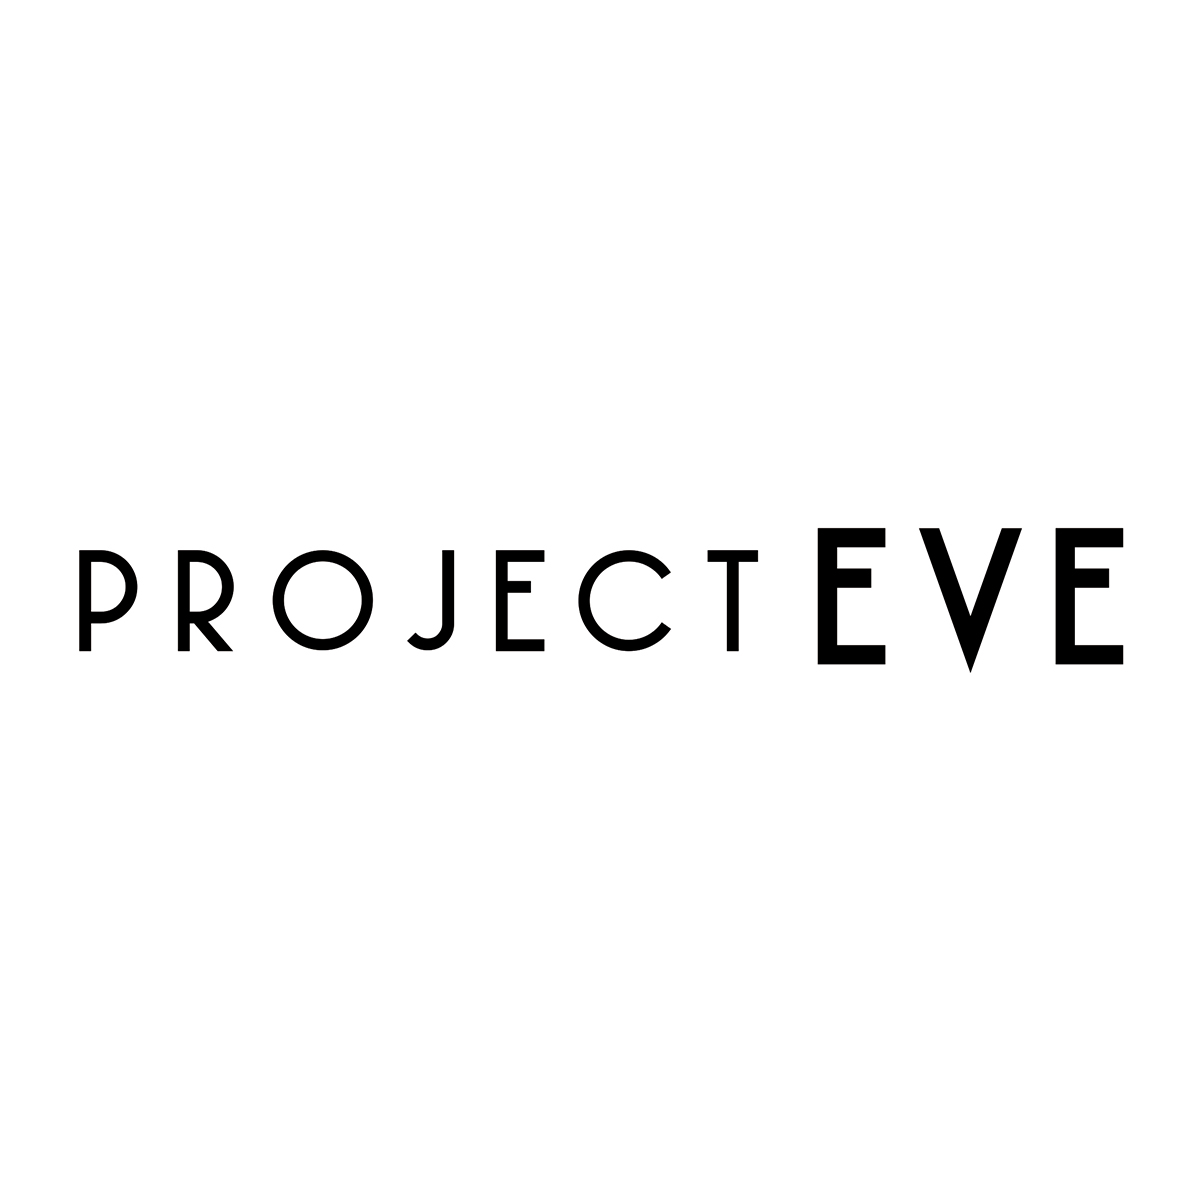 ProjectEve, Next Galleria Malls